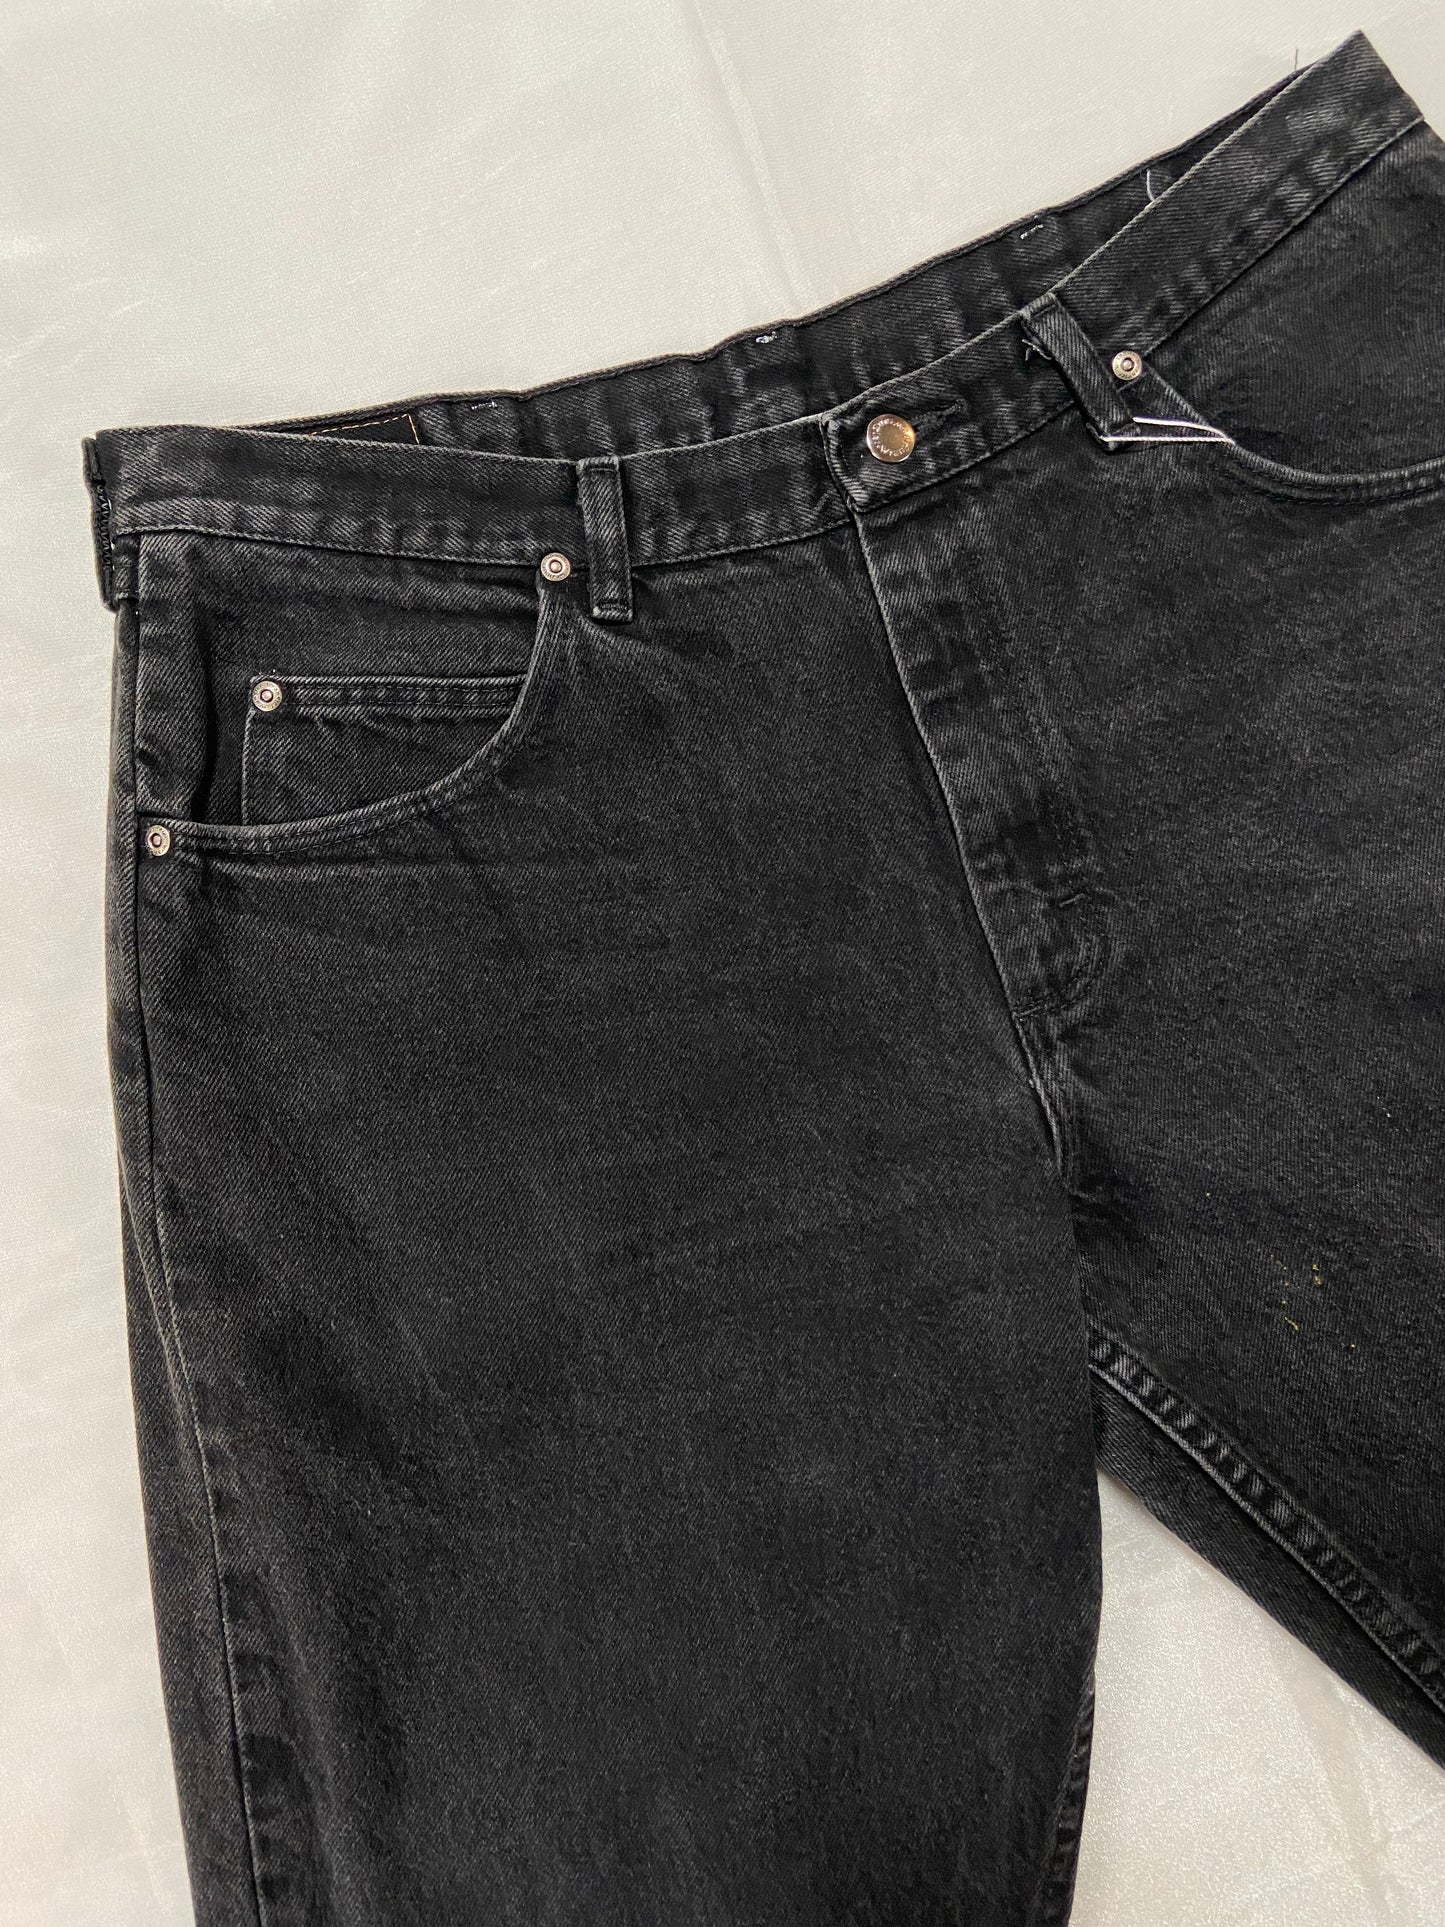 Black Wrangler Jeans - 34”